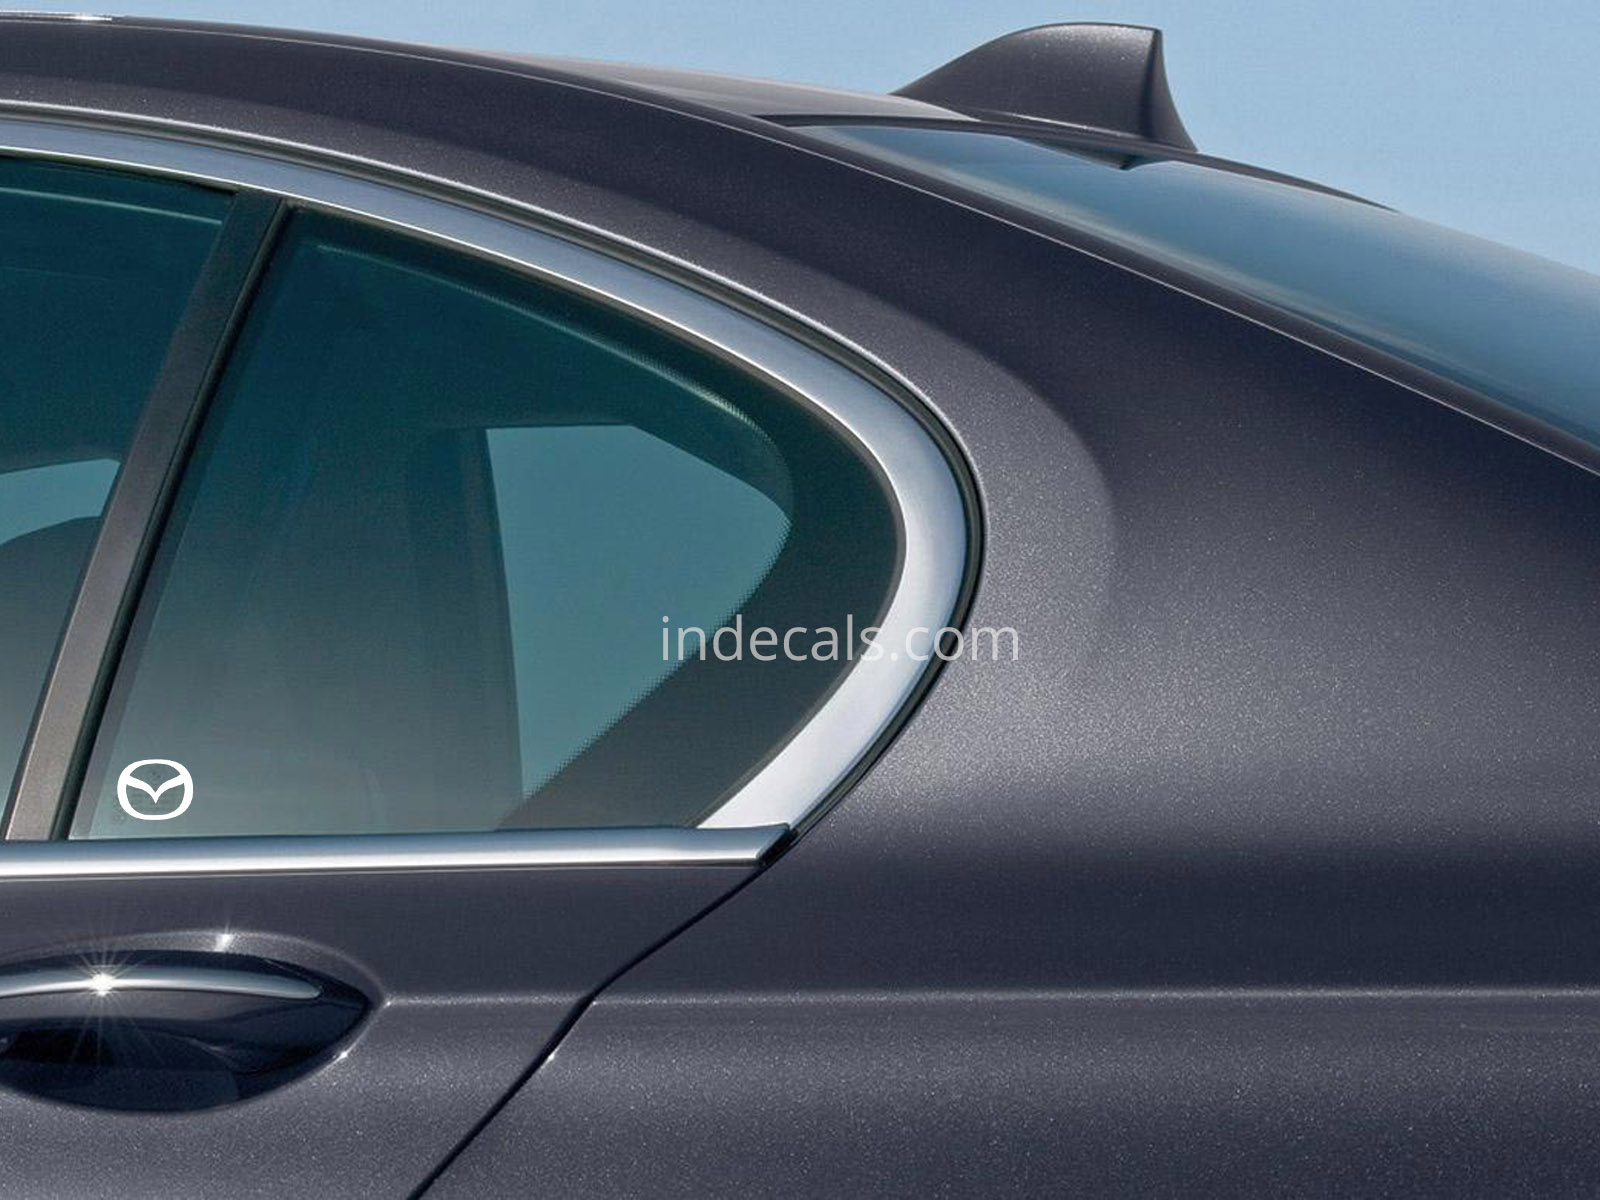 3 x Mazda Stickers for Rear Window - White